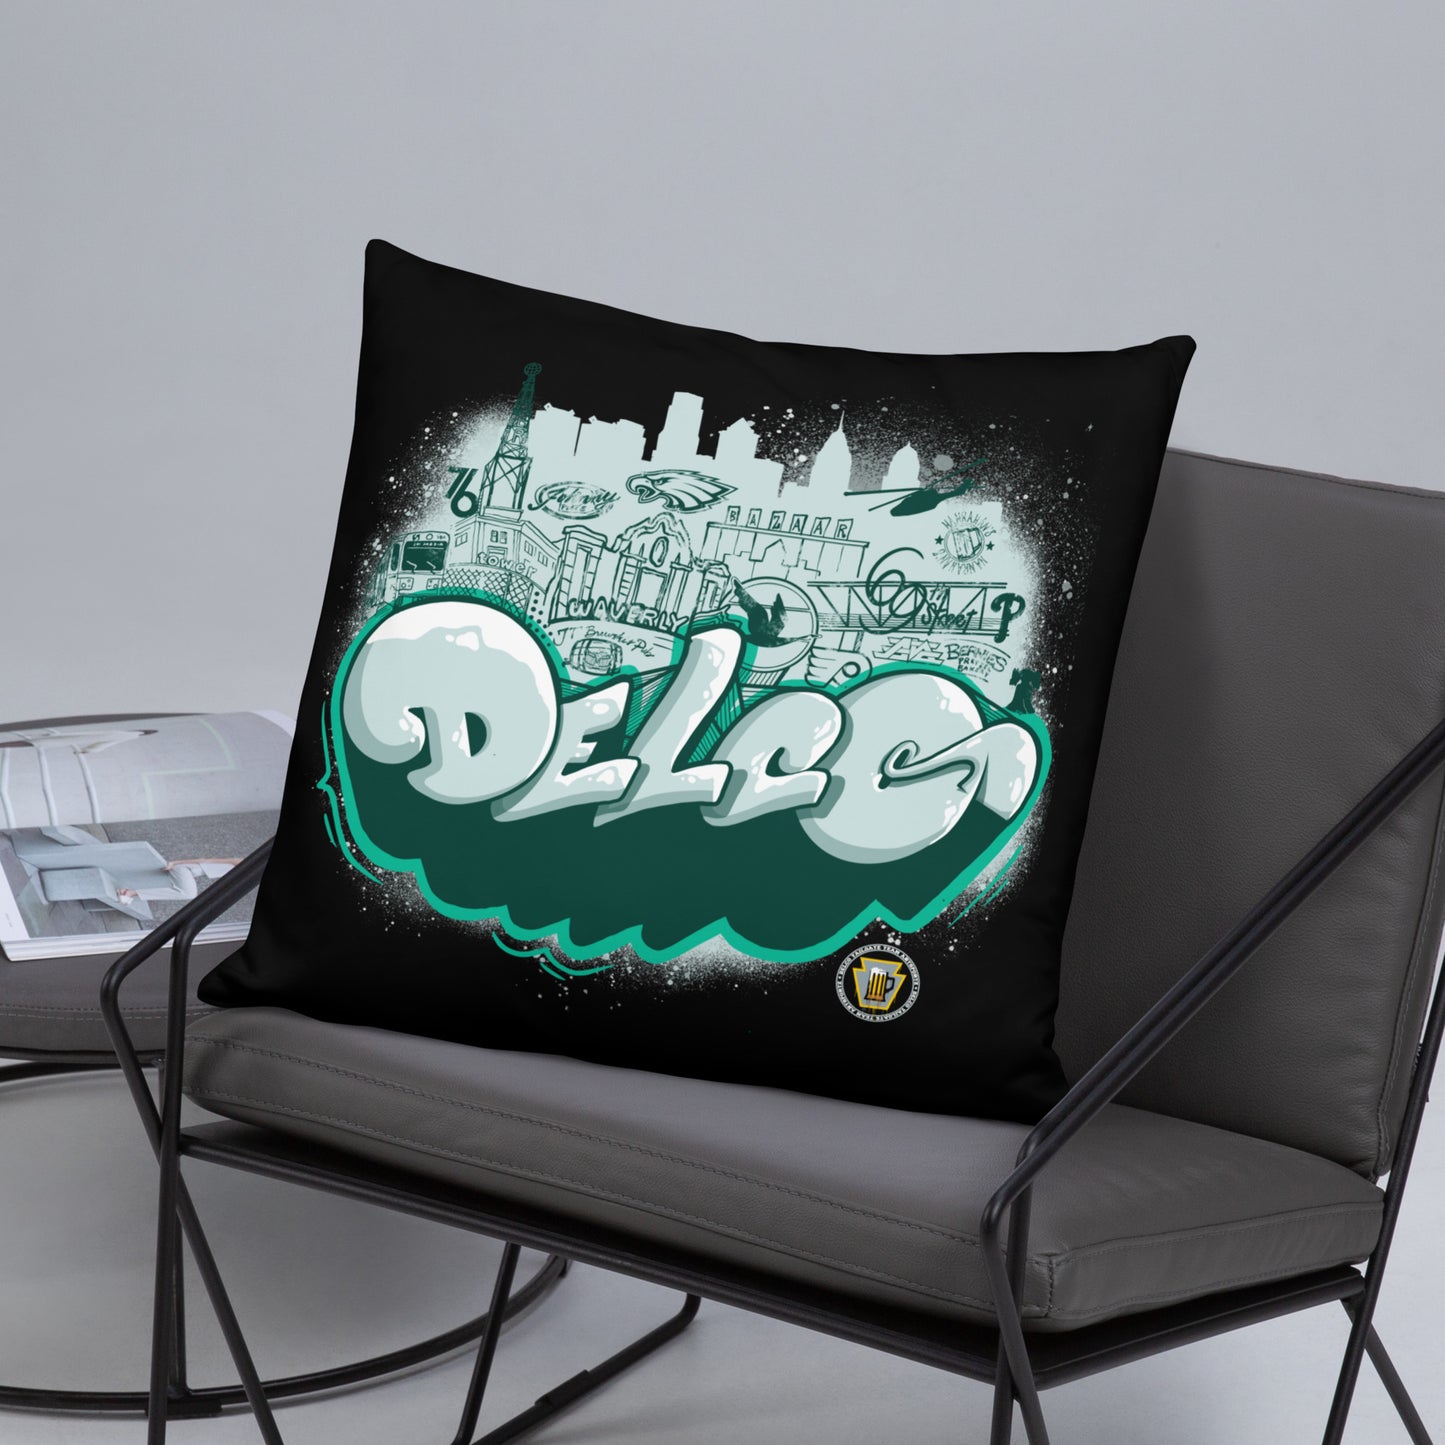 Delco Tailgate Tour Basic Pillow